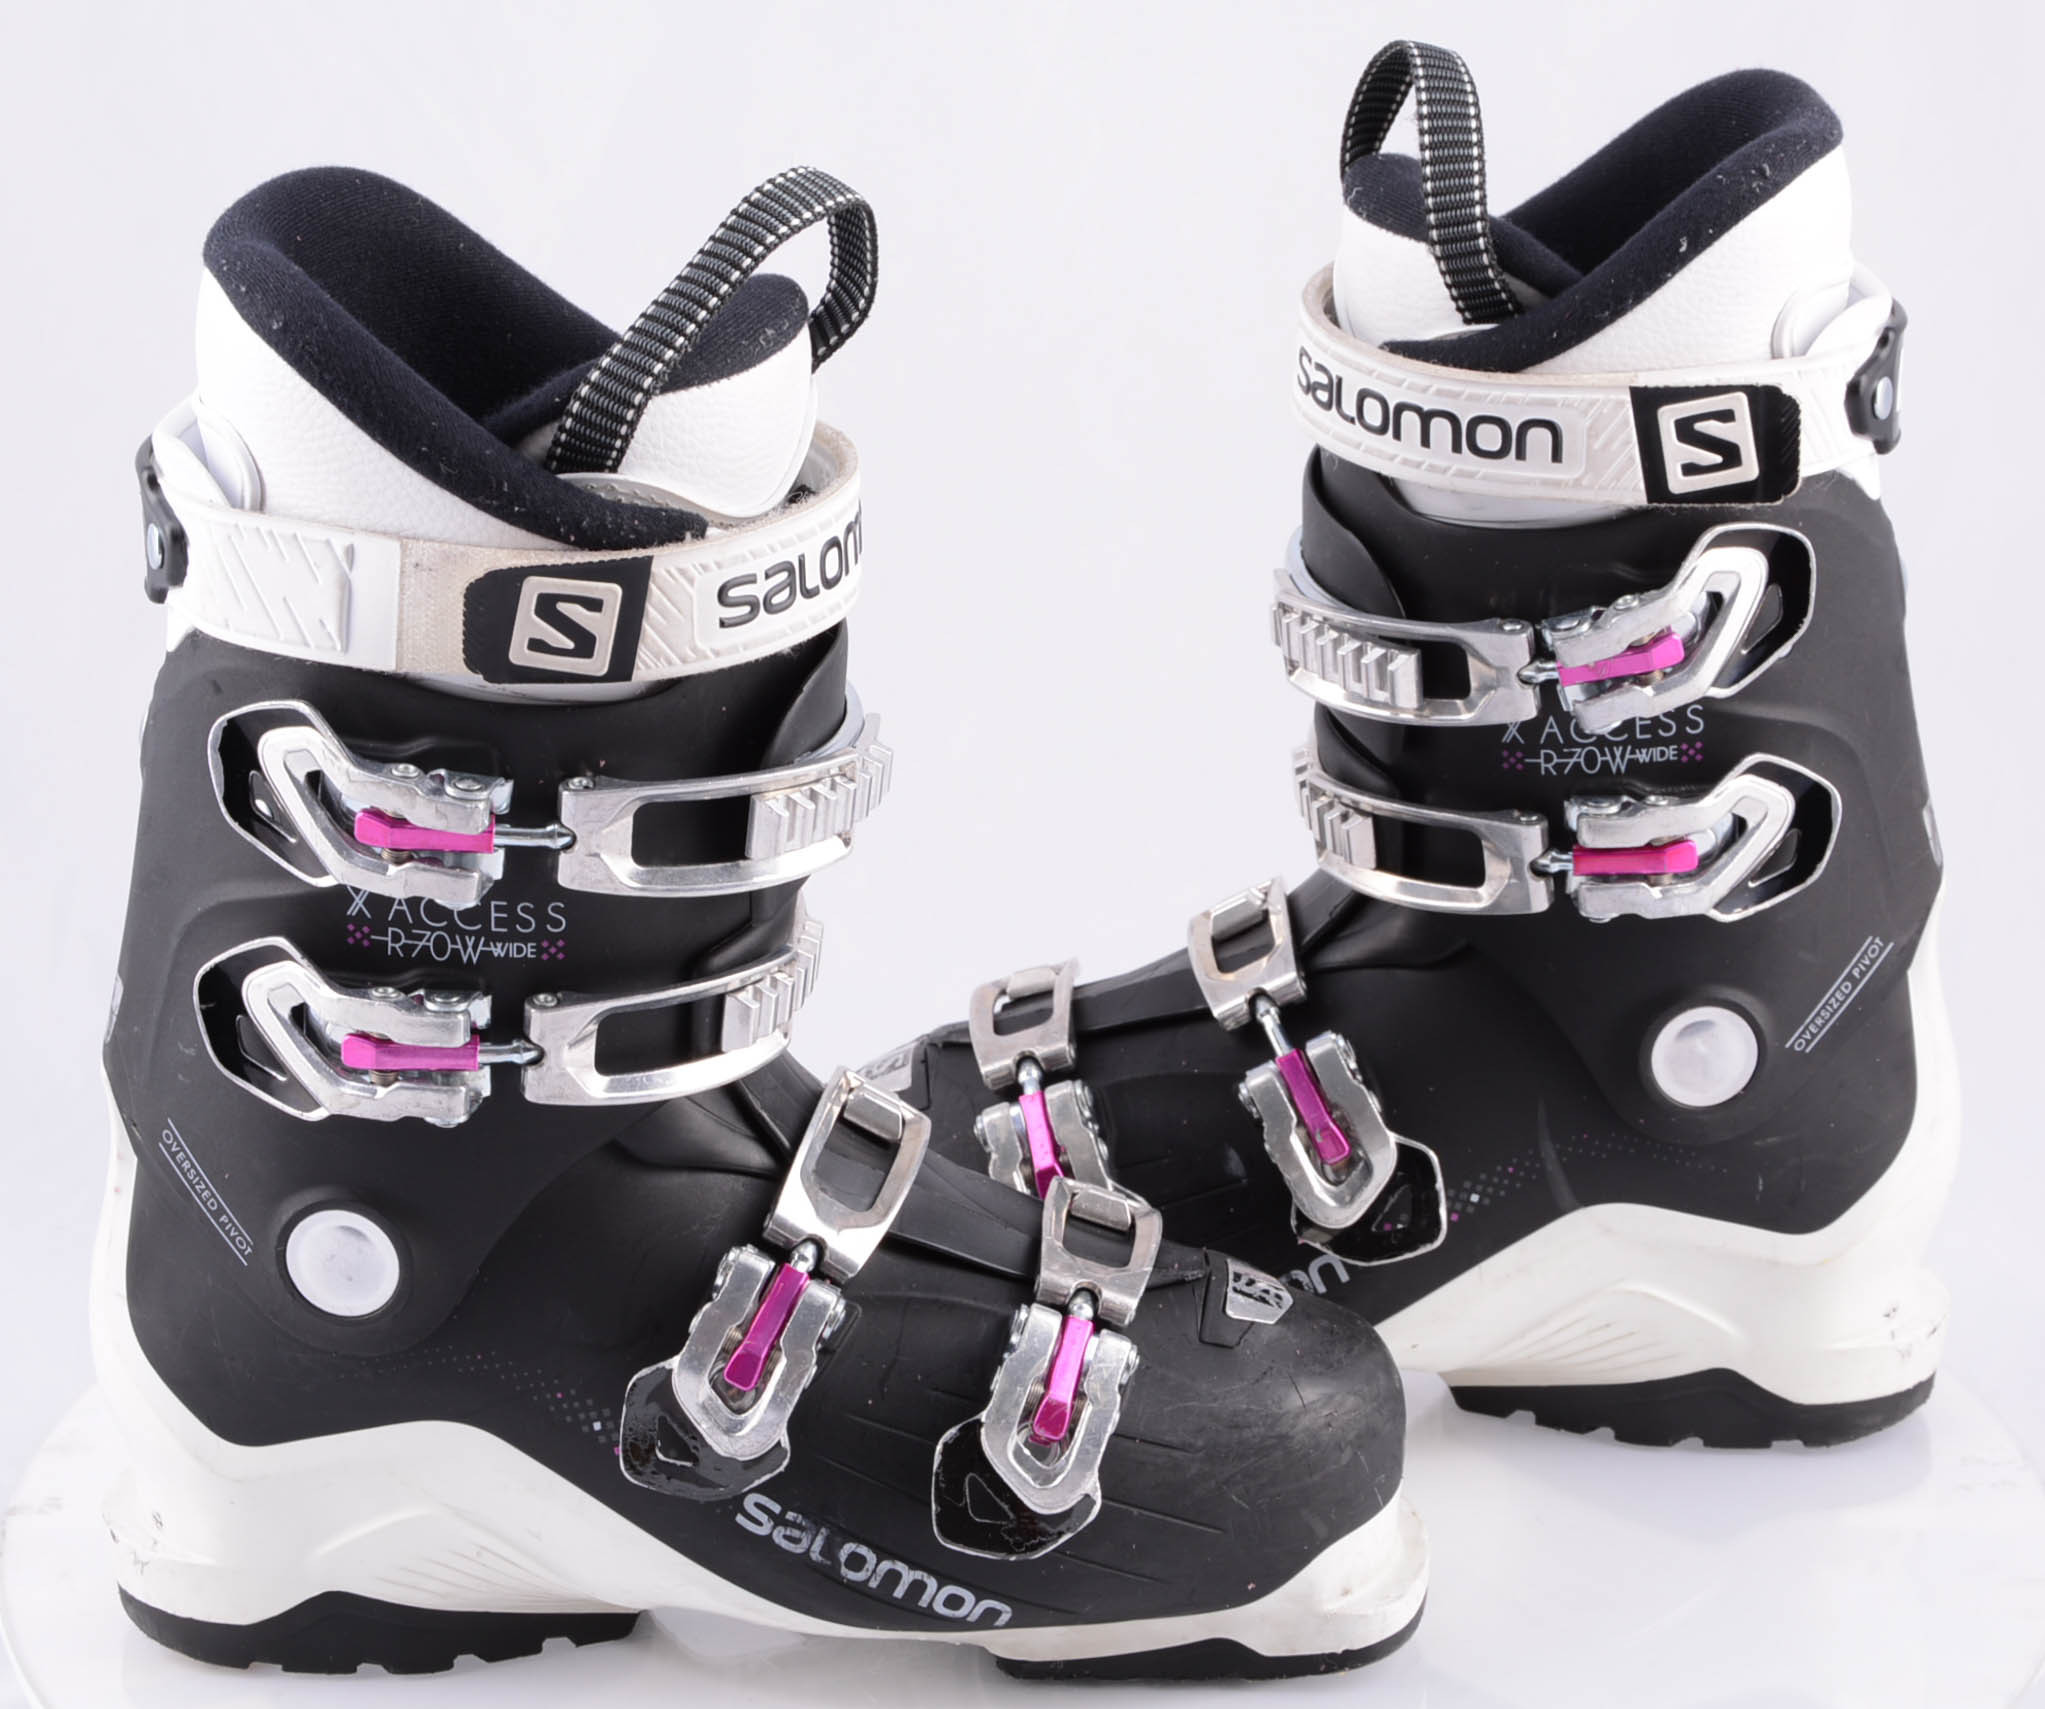 Afstoten langzaam opleiding dames skischoenen SALOMON X ACCESS R70 W, WIDE, OVERSIZED pivot, micro,  macro - Mardosport.nl